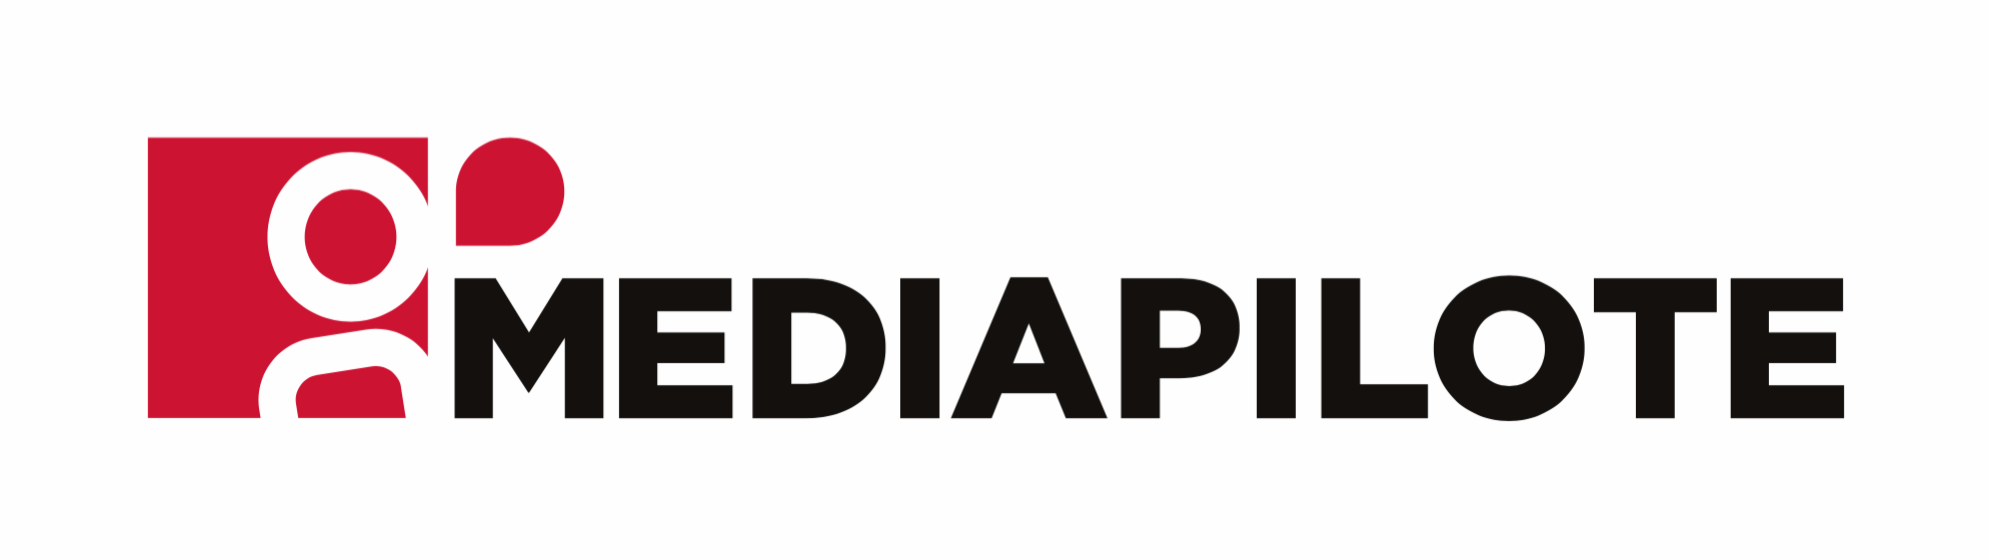 partenaires_mediapilote-logo2017